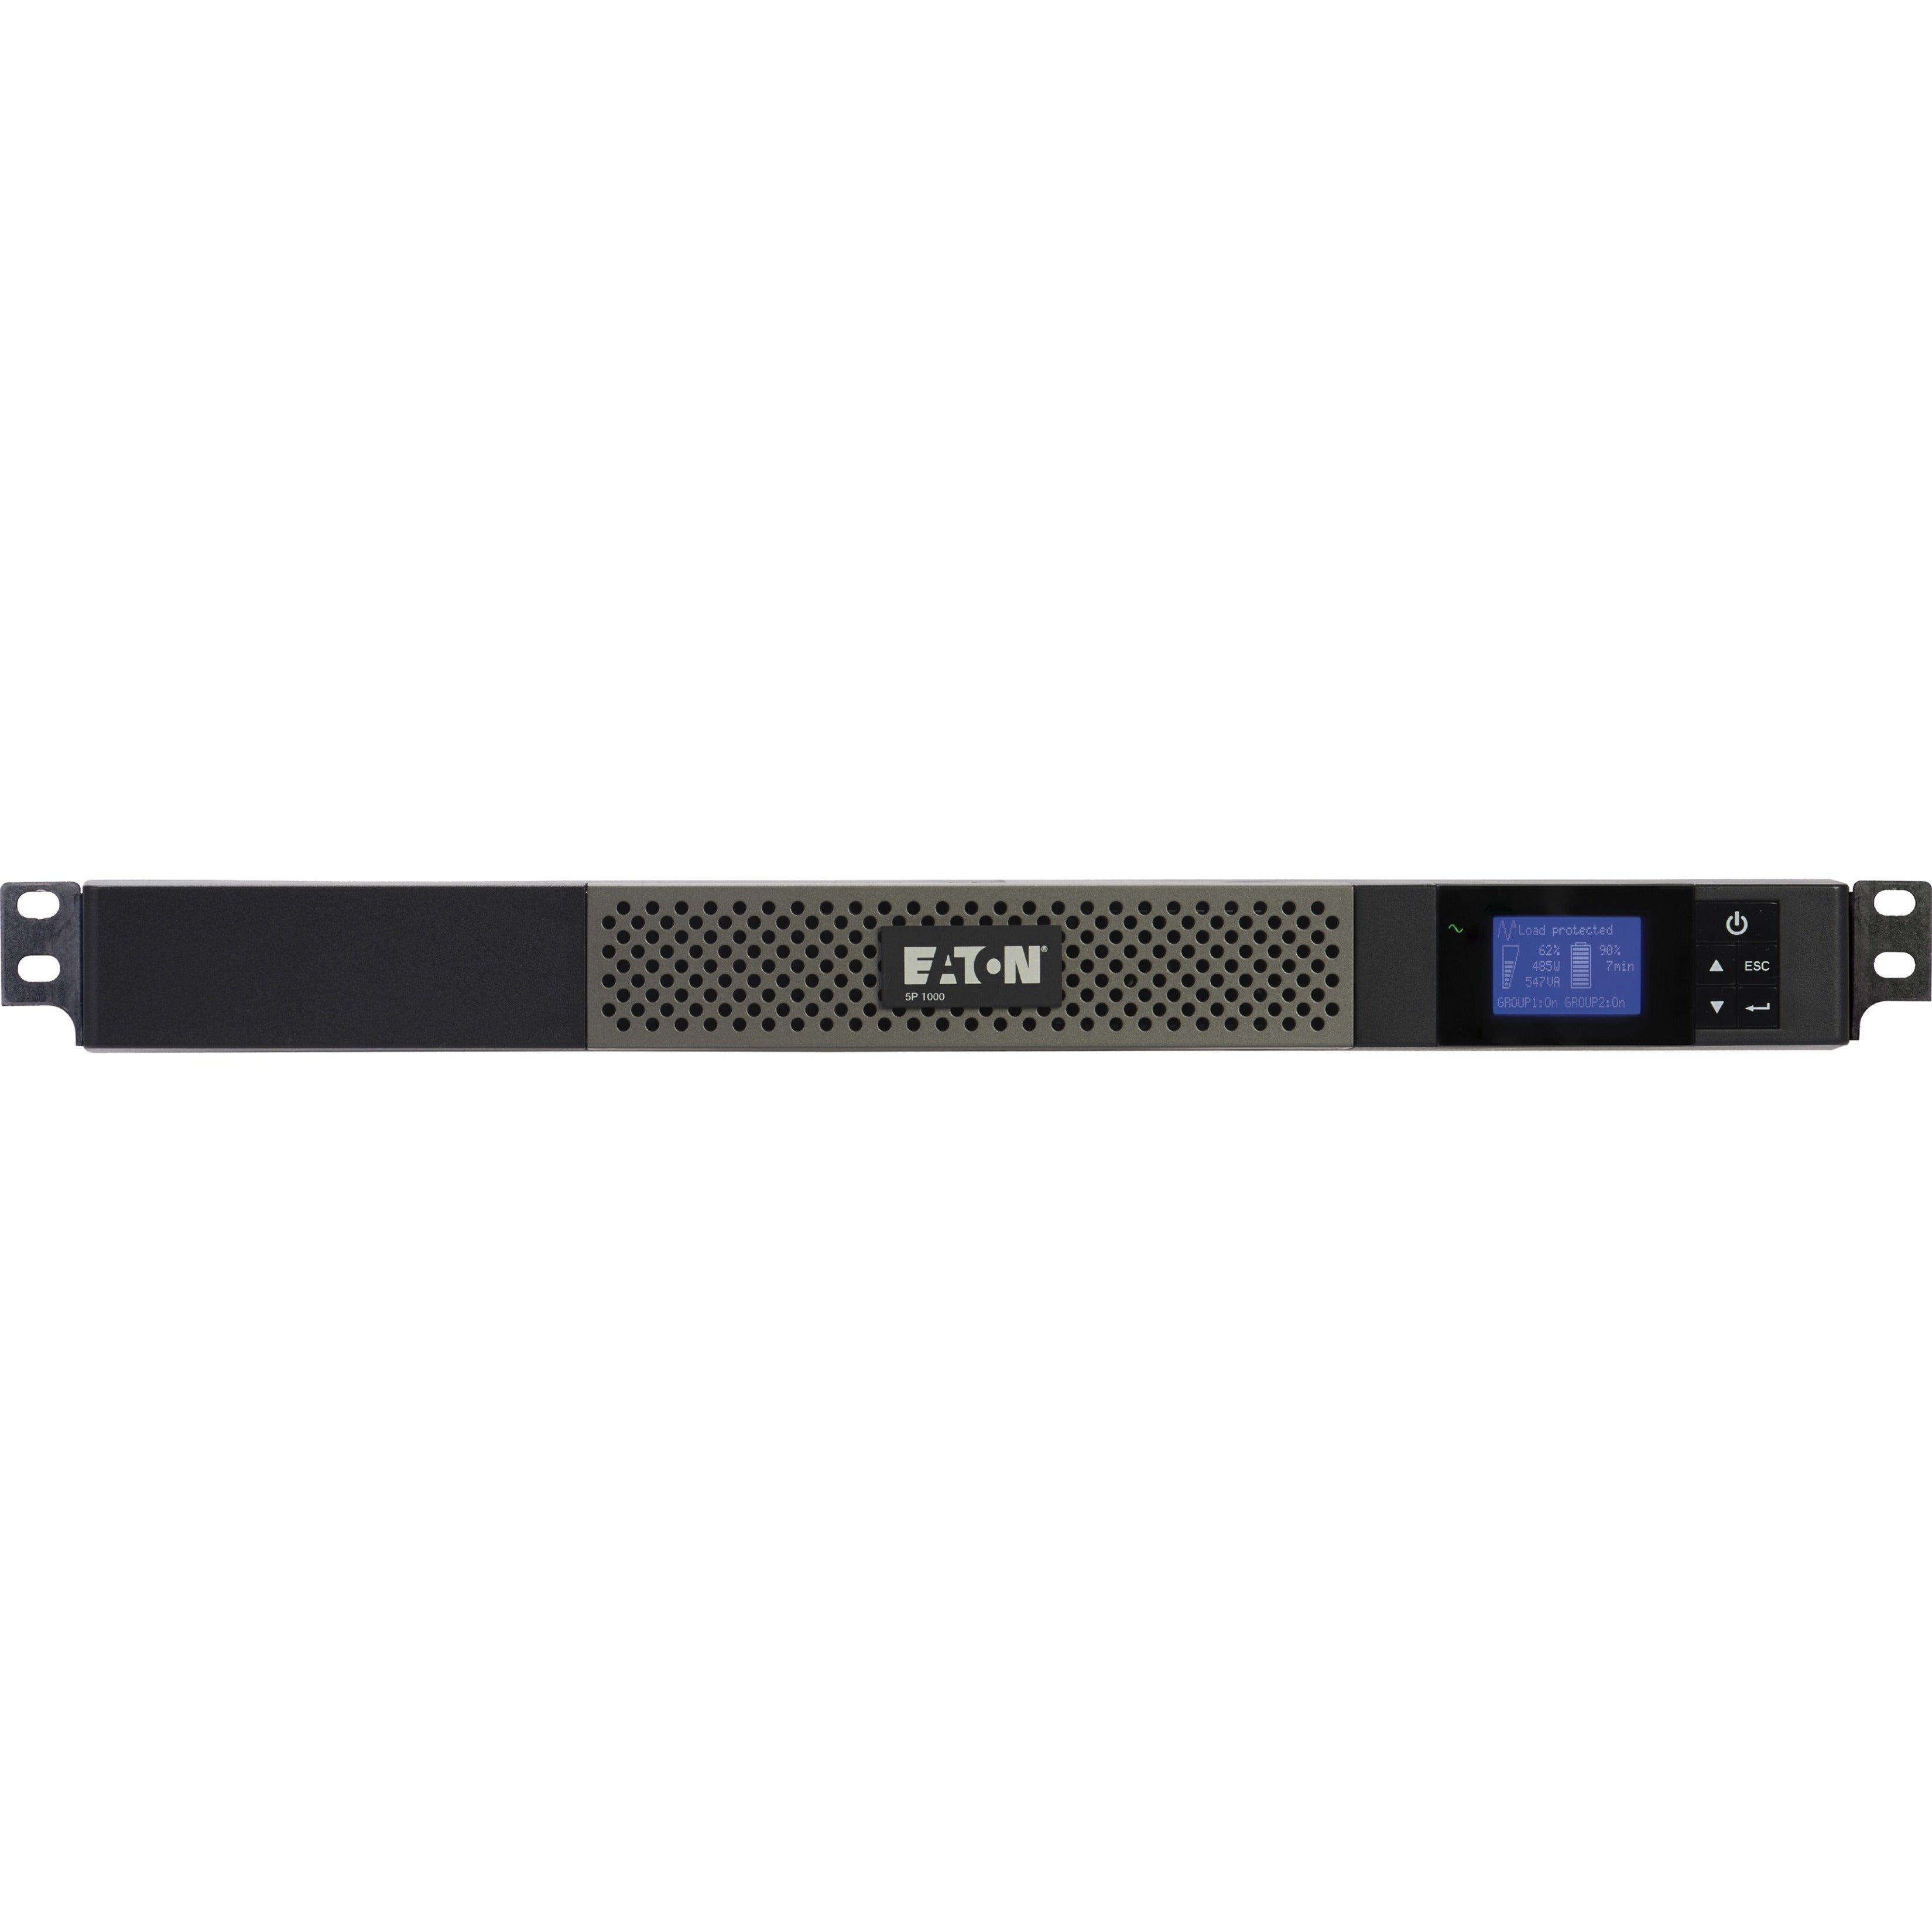 Eaton 5P 5P1000R Rackmount UPS, 1000VA 770W 120V Line-Interactive UPS, True Sine Wave, Cybersecure Network Card Option